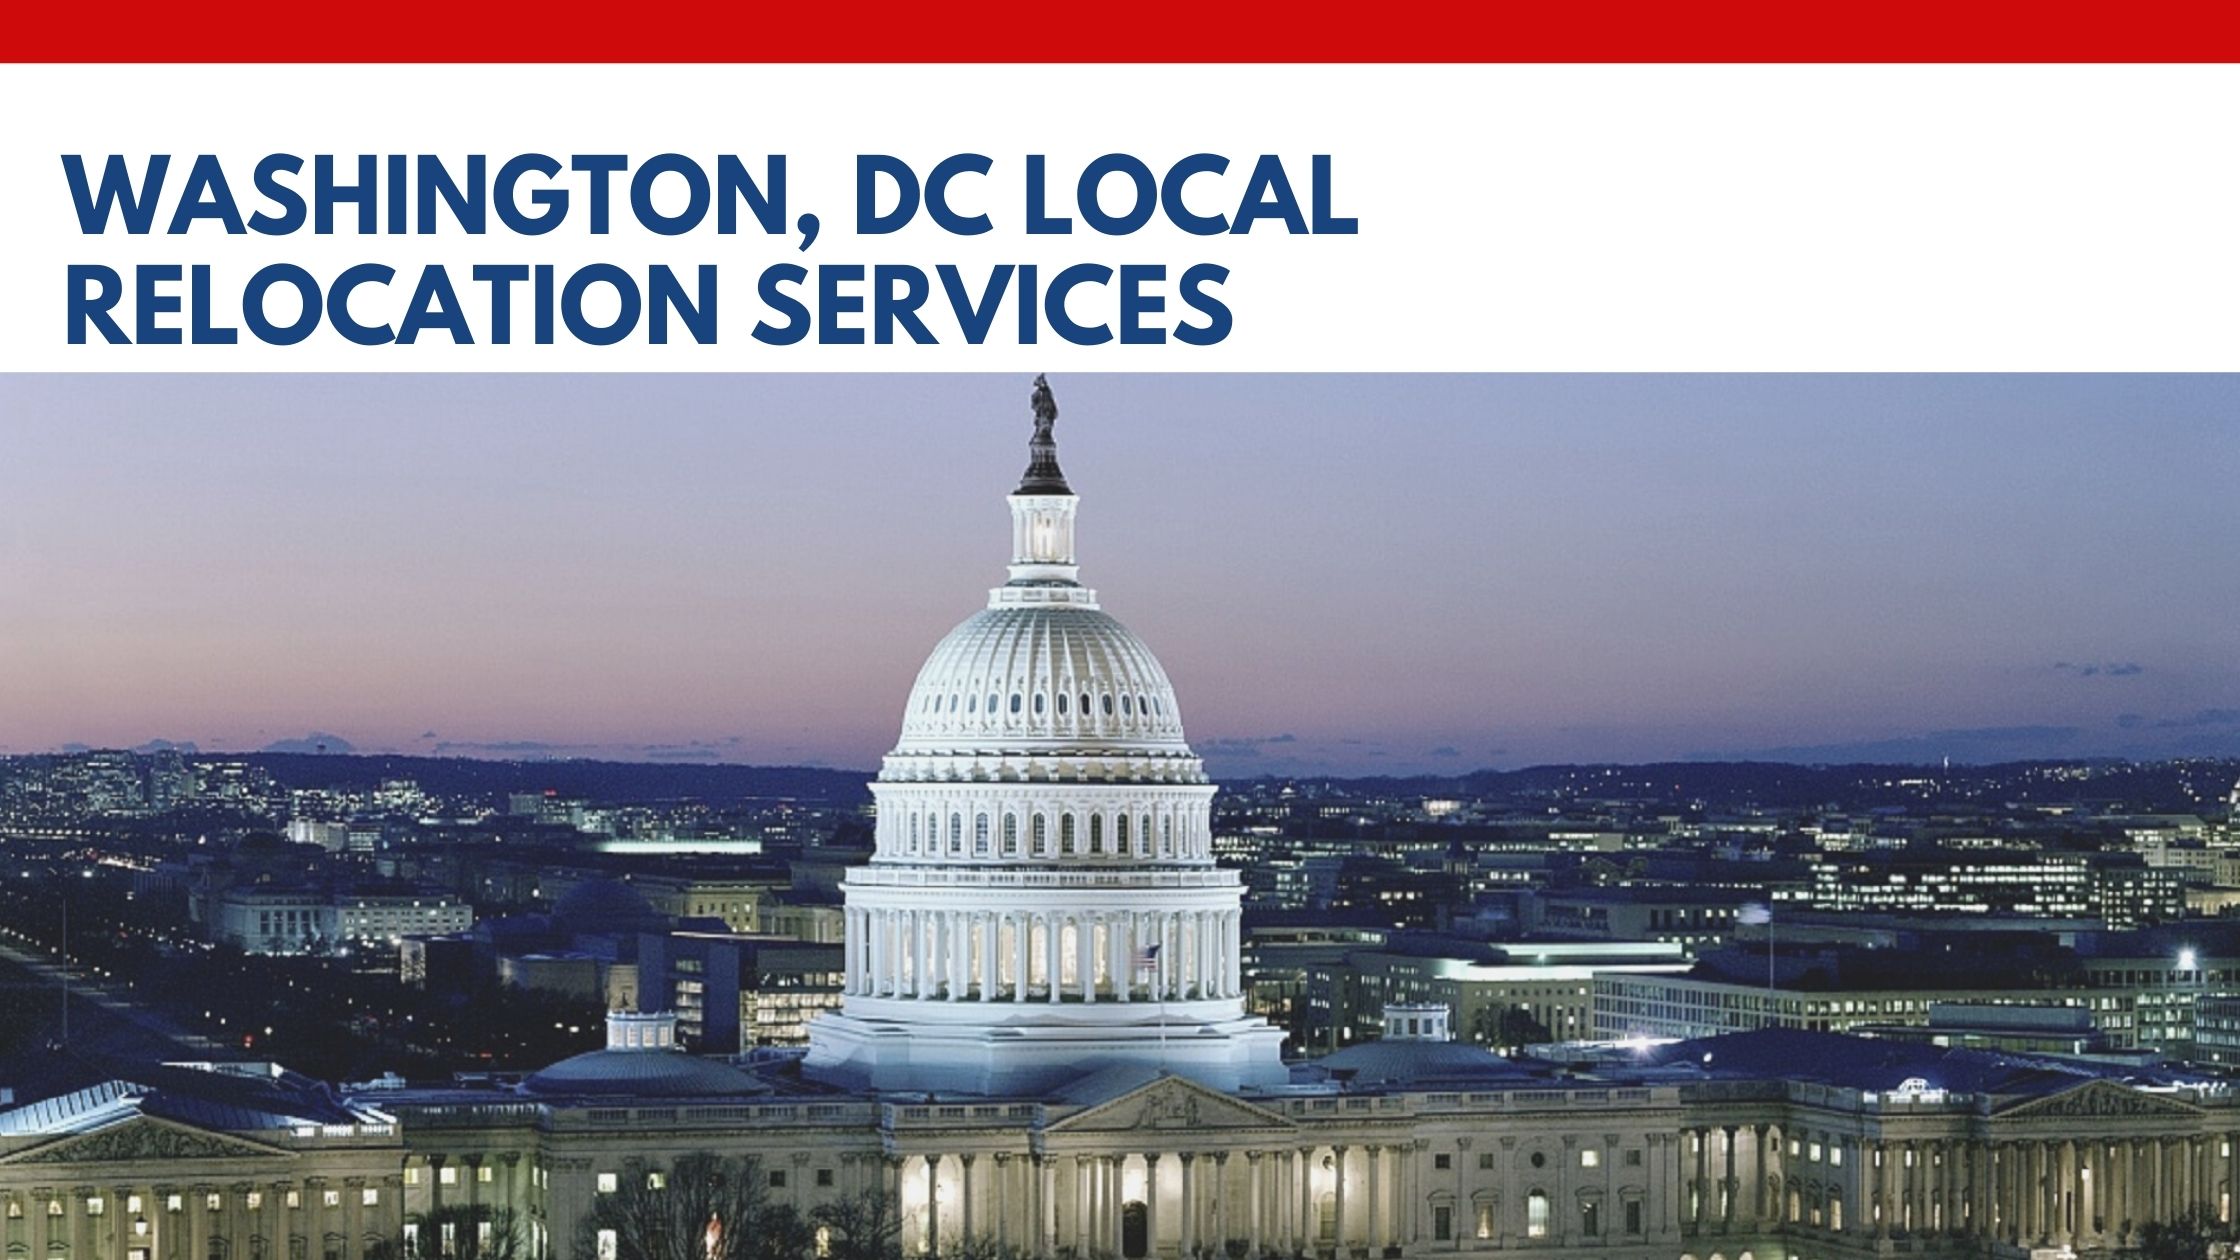 Washington, DC Local Relocation Services